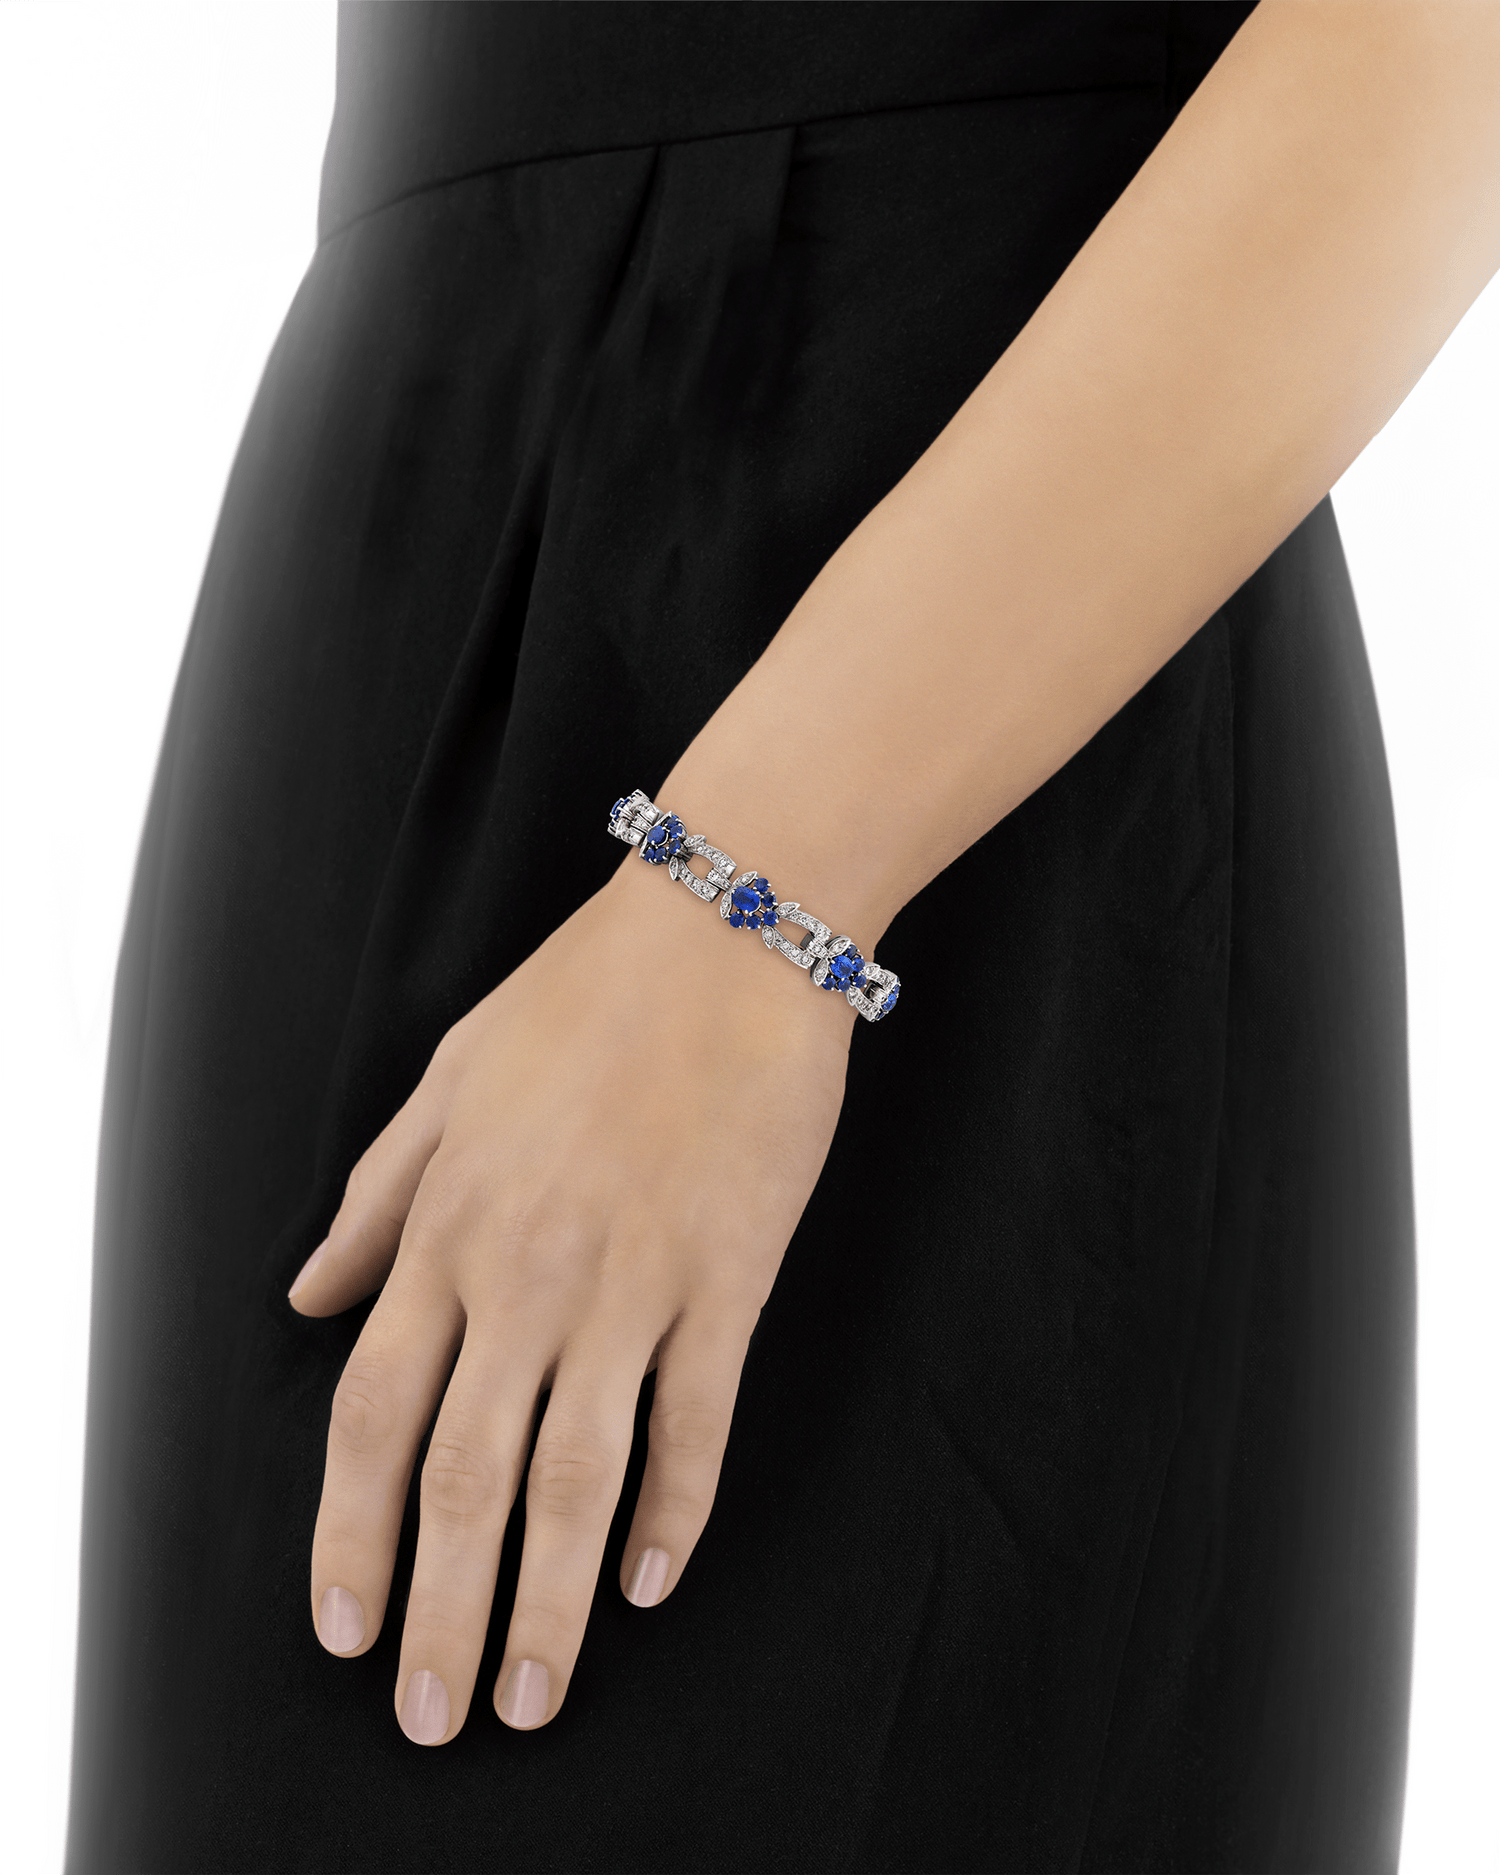 Tiffany & Co. Burma Sapphire Bracelet, 7.90 Carats